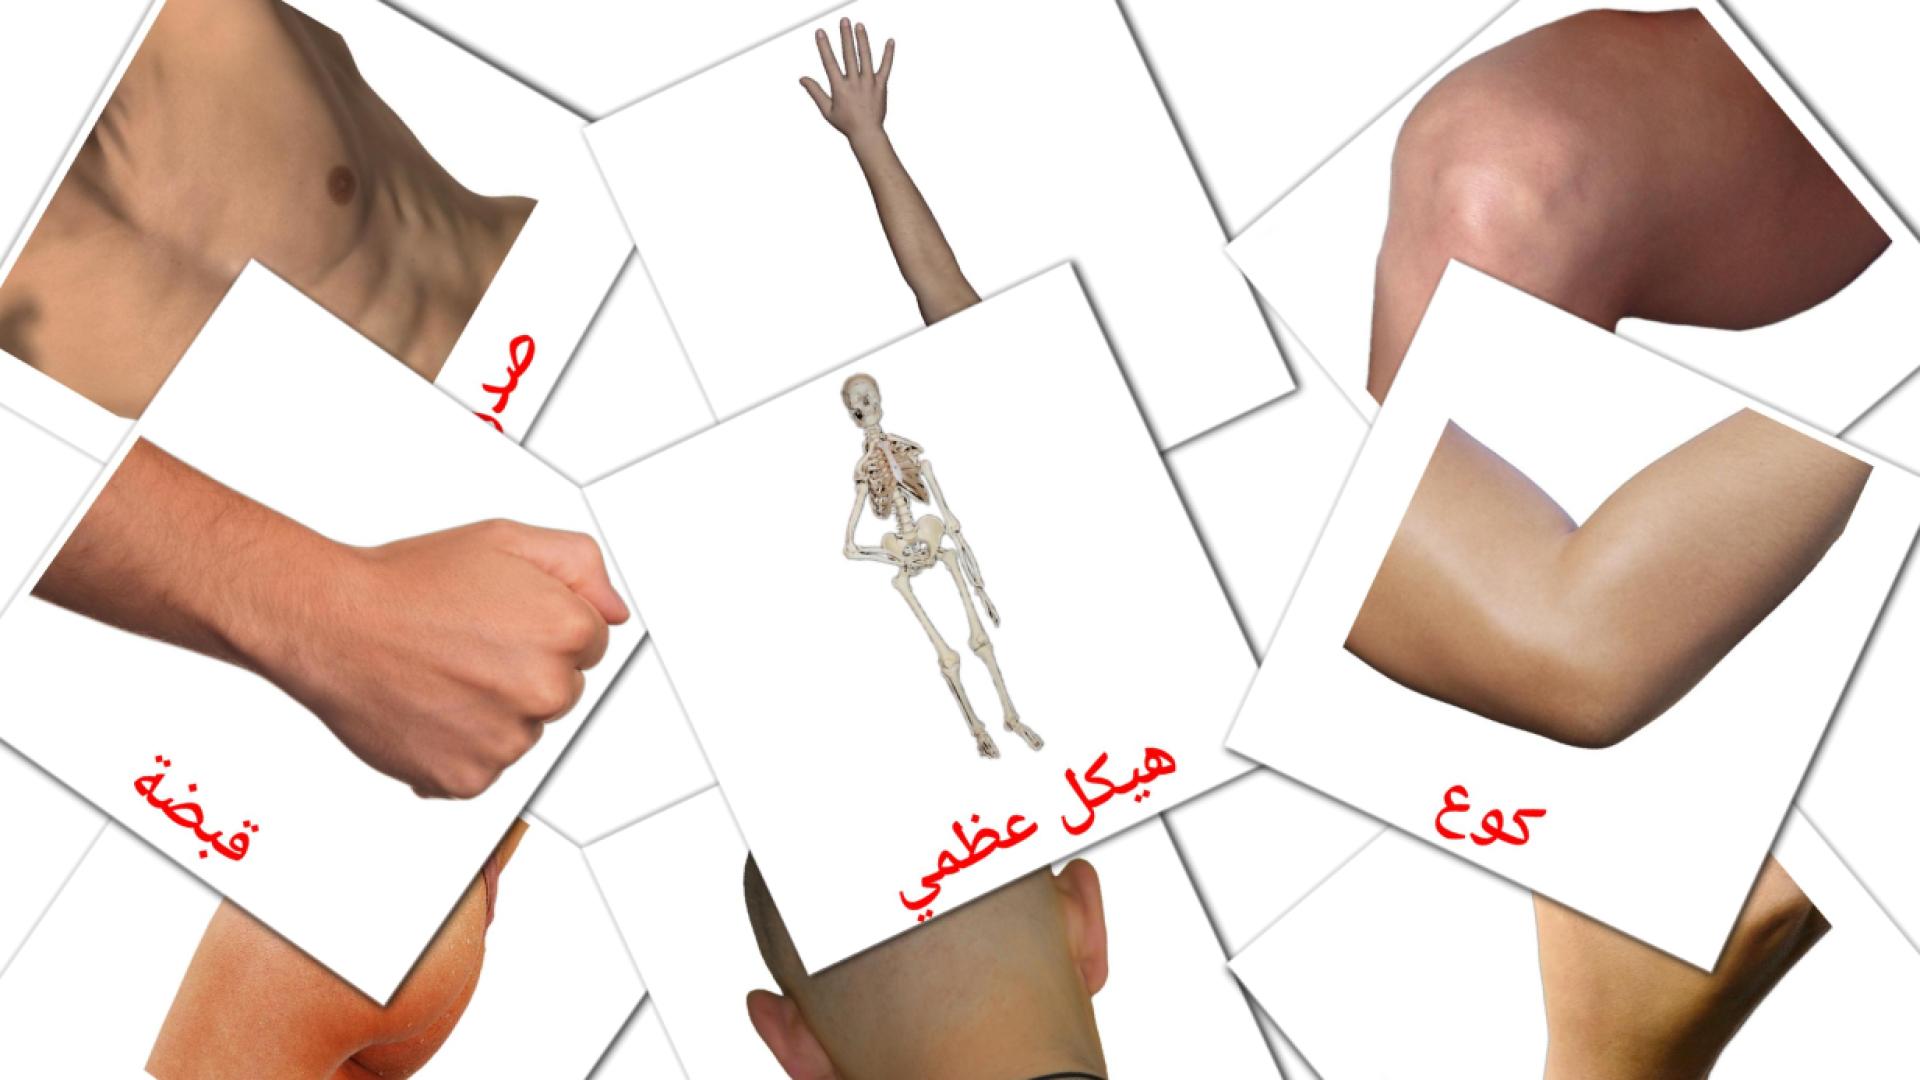 Körper - Arabisch Vokabelkarten